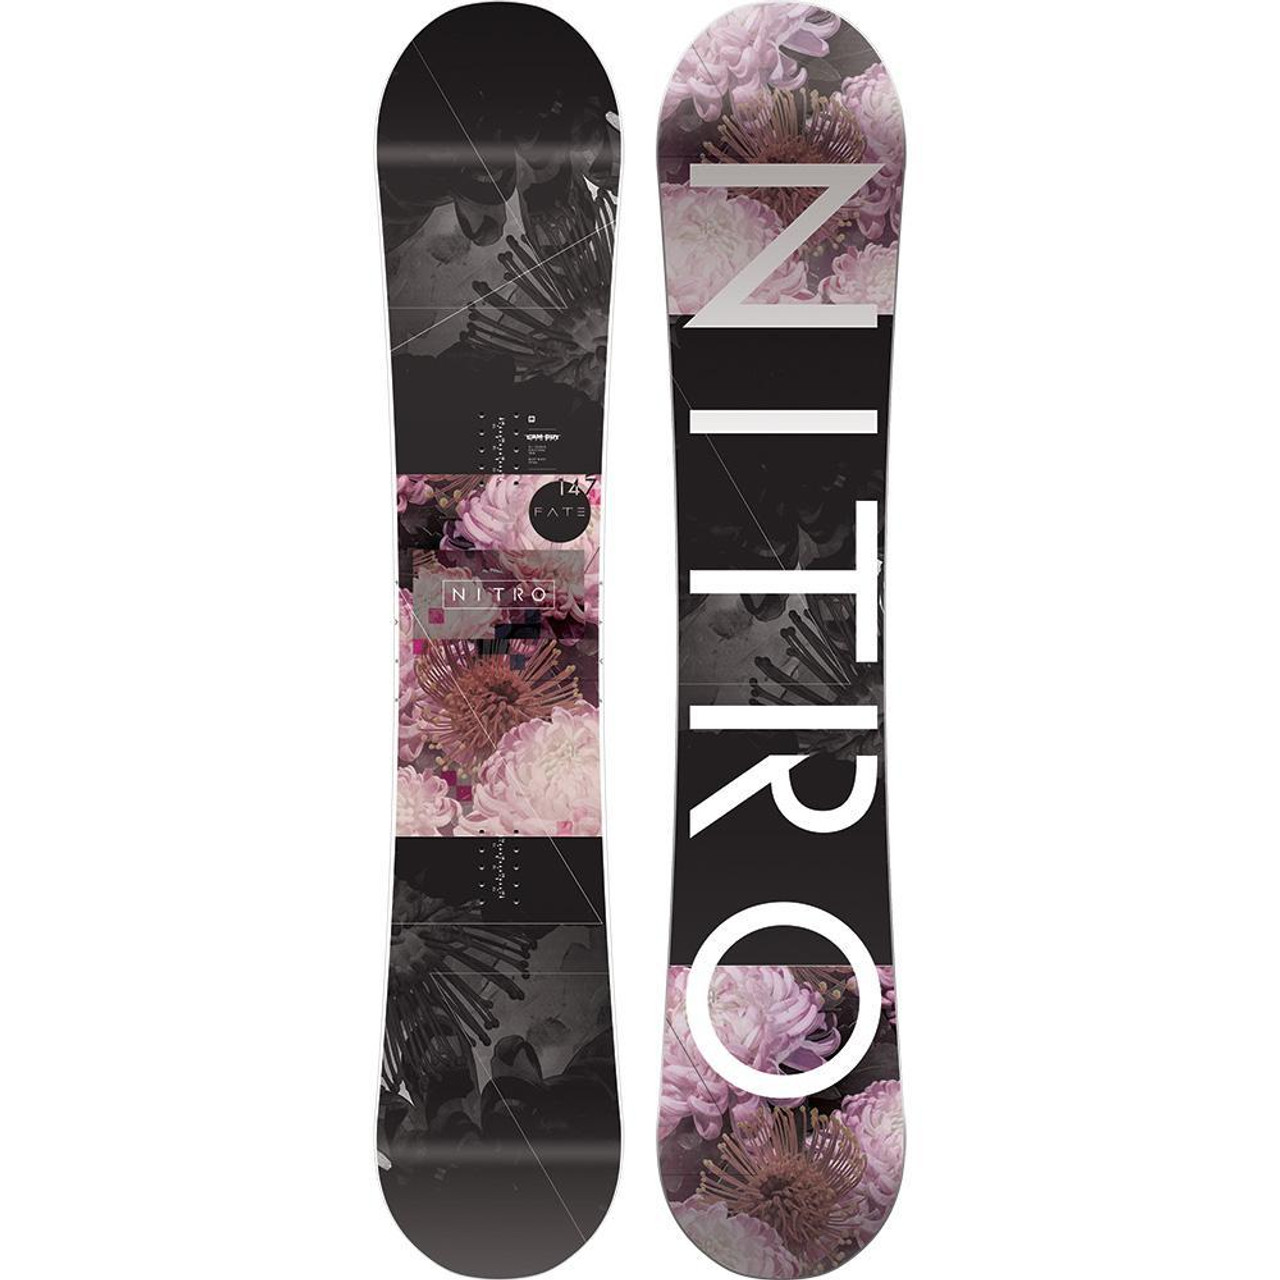 Broer Deuk schuifelen Nitro Fate Women's Snowboard | Nitro Snowboard 2019 | Get Boards